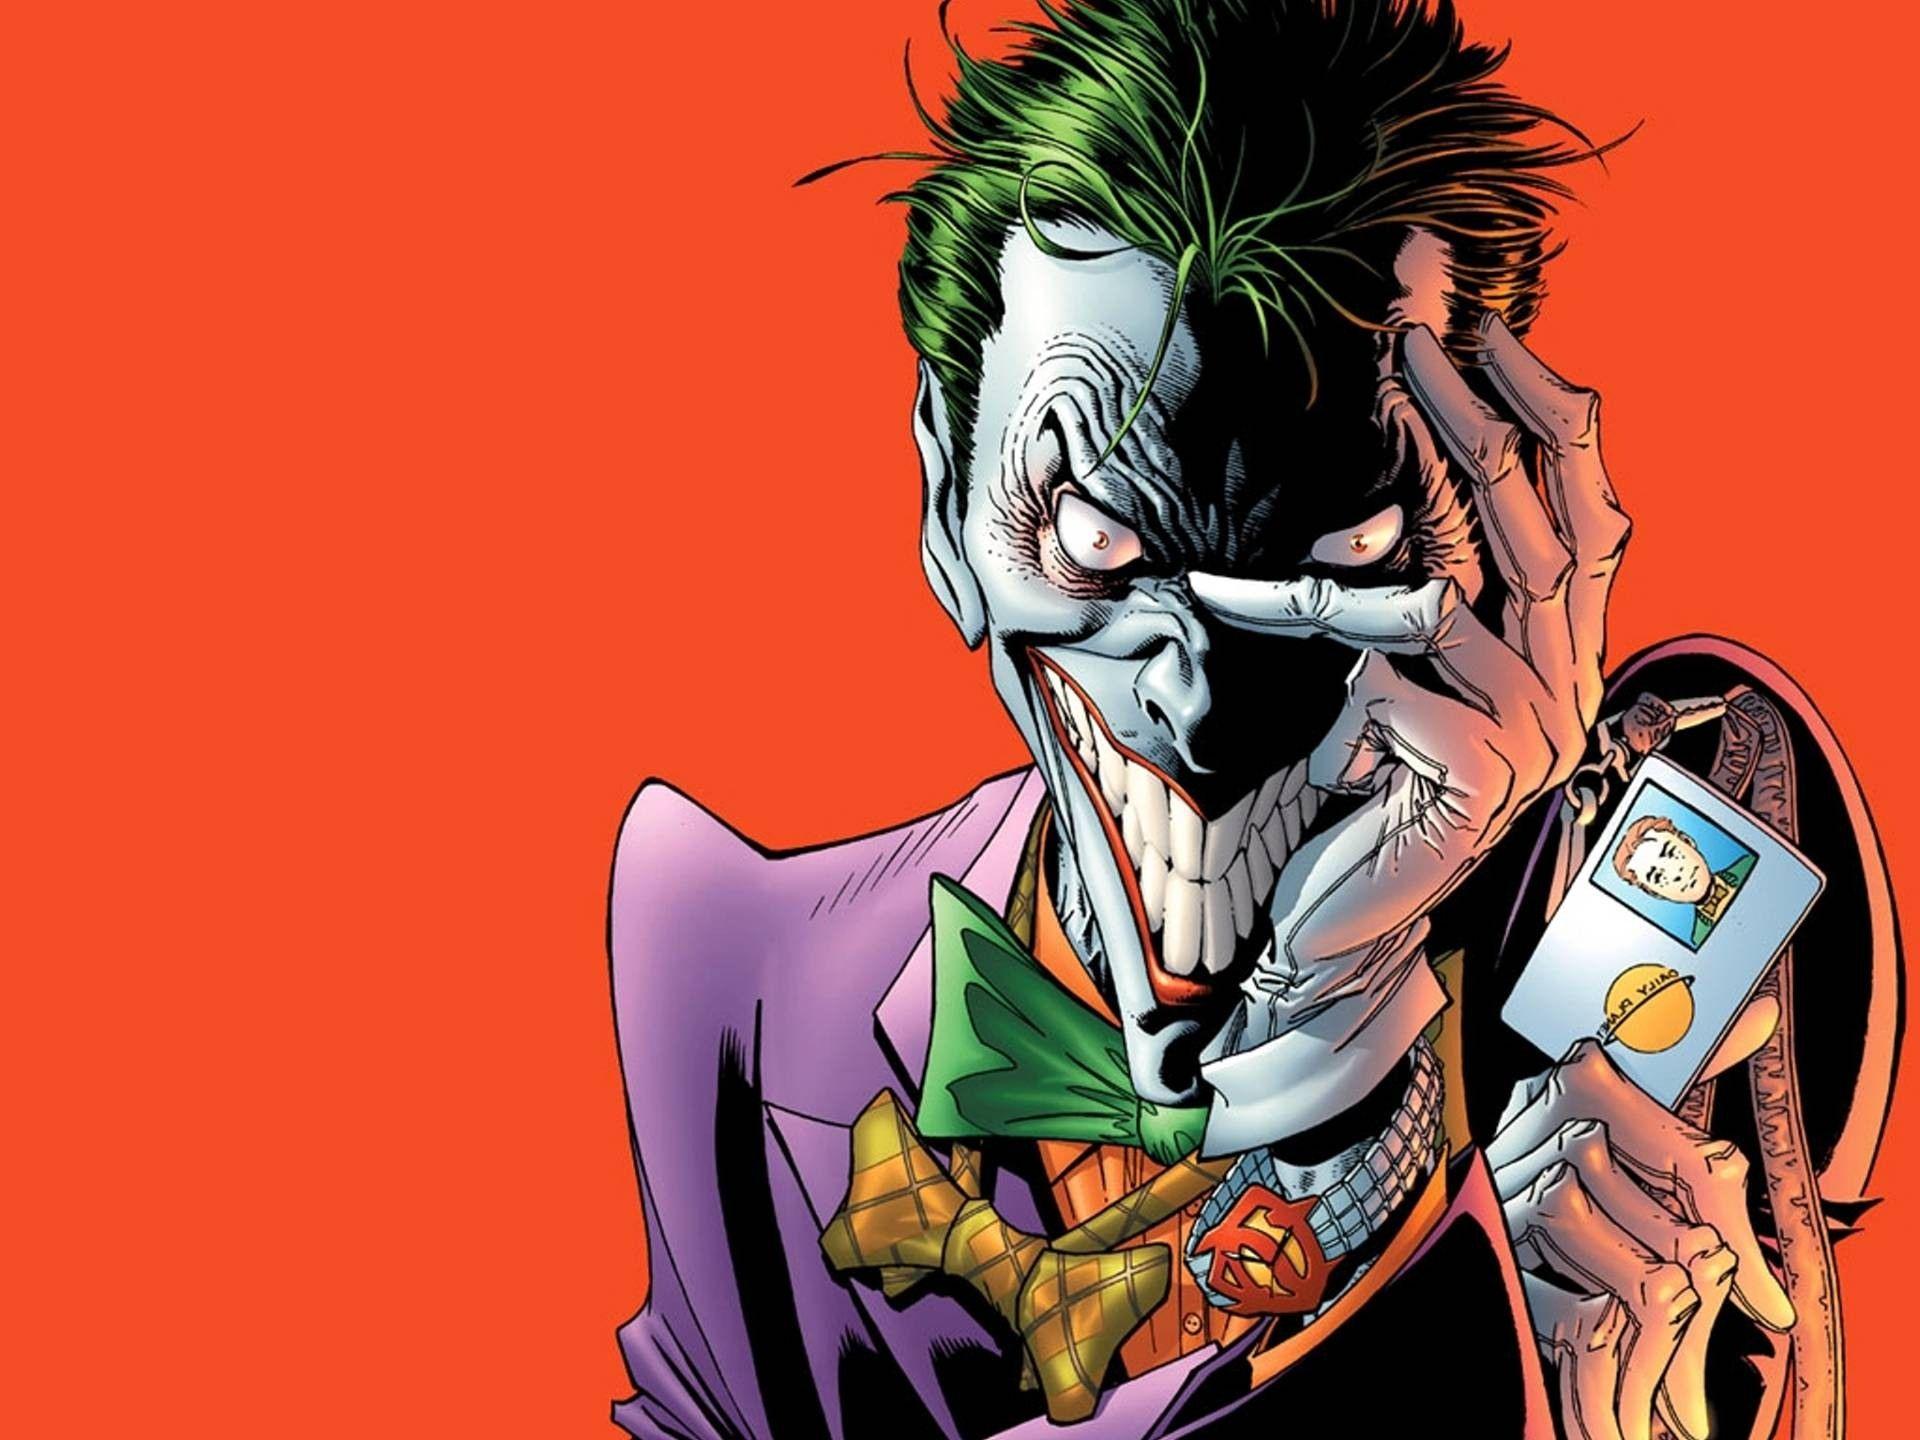 The Joker is a fictional supervillain created by Bill Finger, Bob